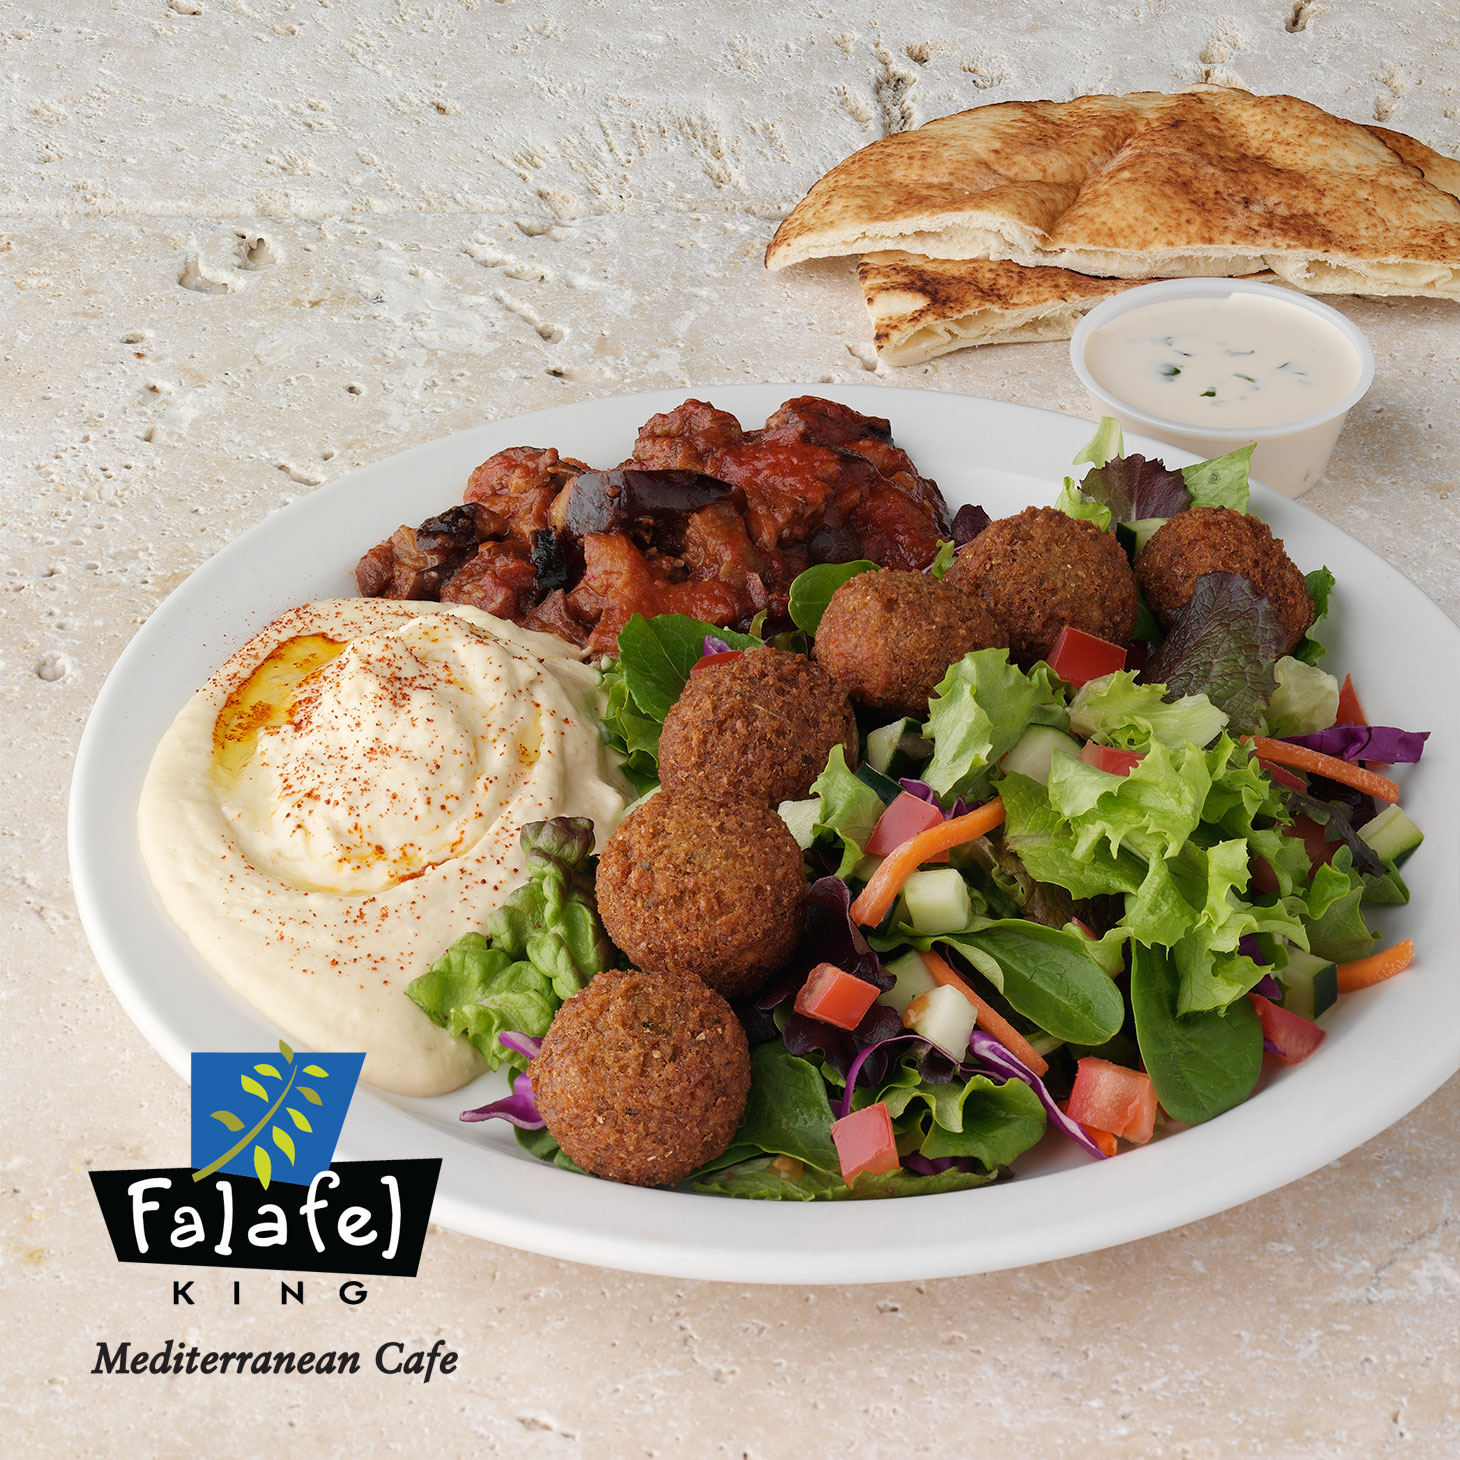 Falafel Plate|6 Falafel balls plus 2 Mediterranean sides. Served with fresh mixed greens & pita.